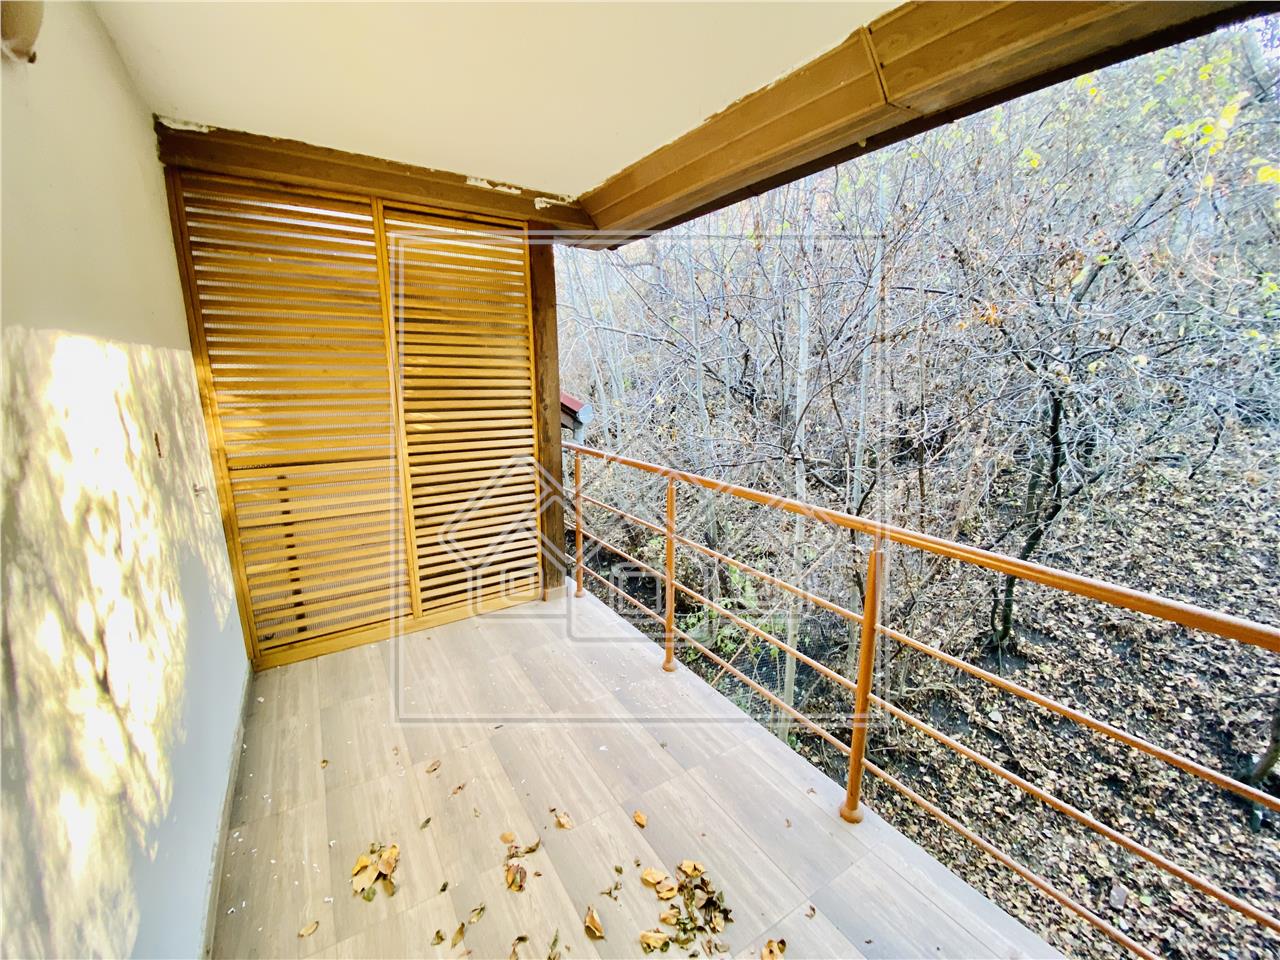 Apartament de inchiriat in Sibiu -3 camere -2 balcone - Zona Strand